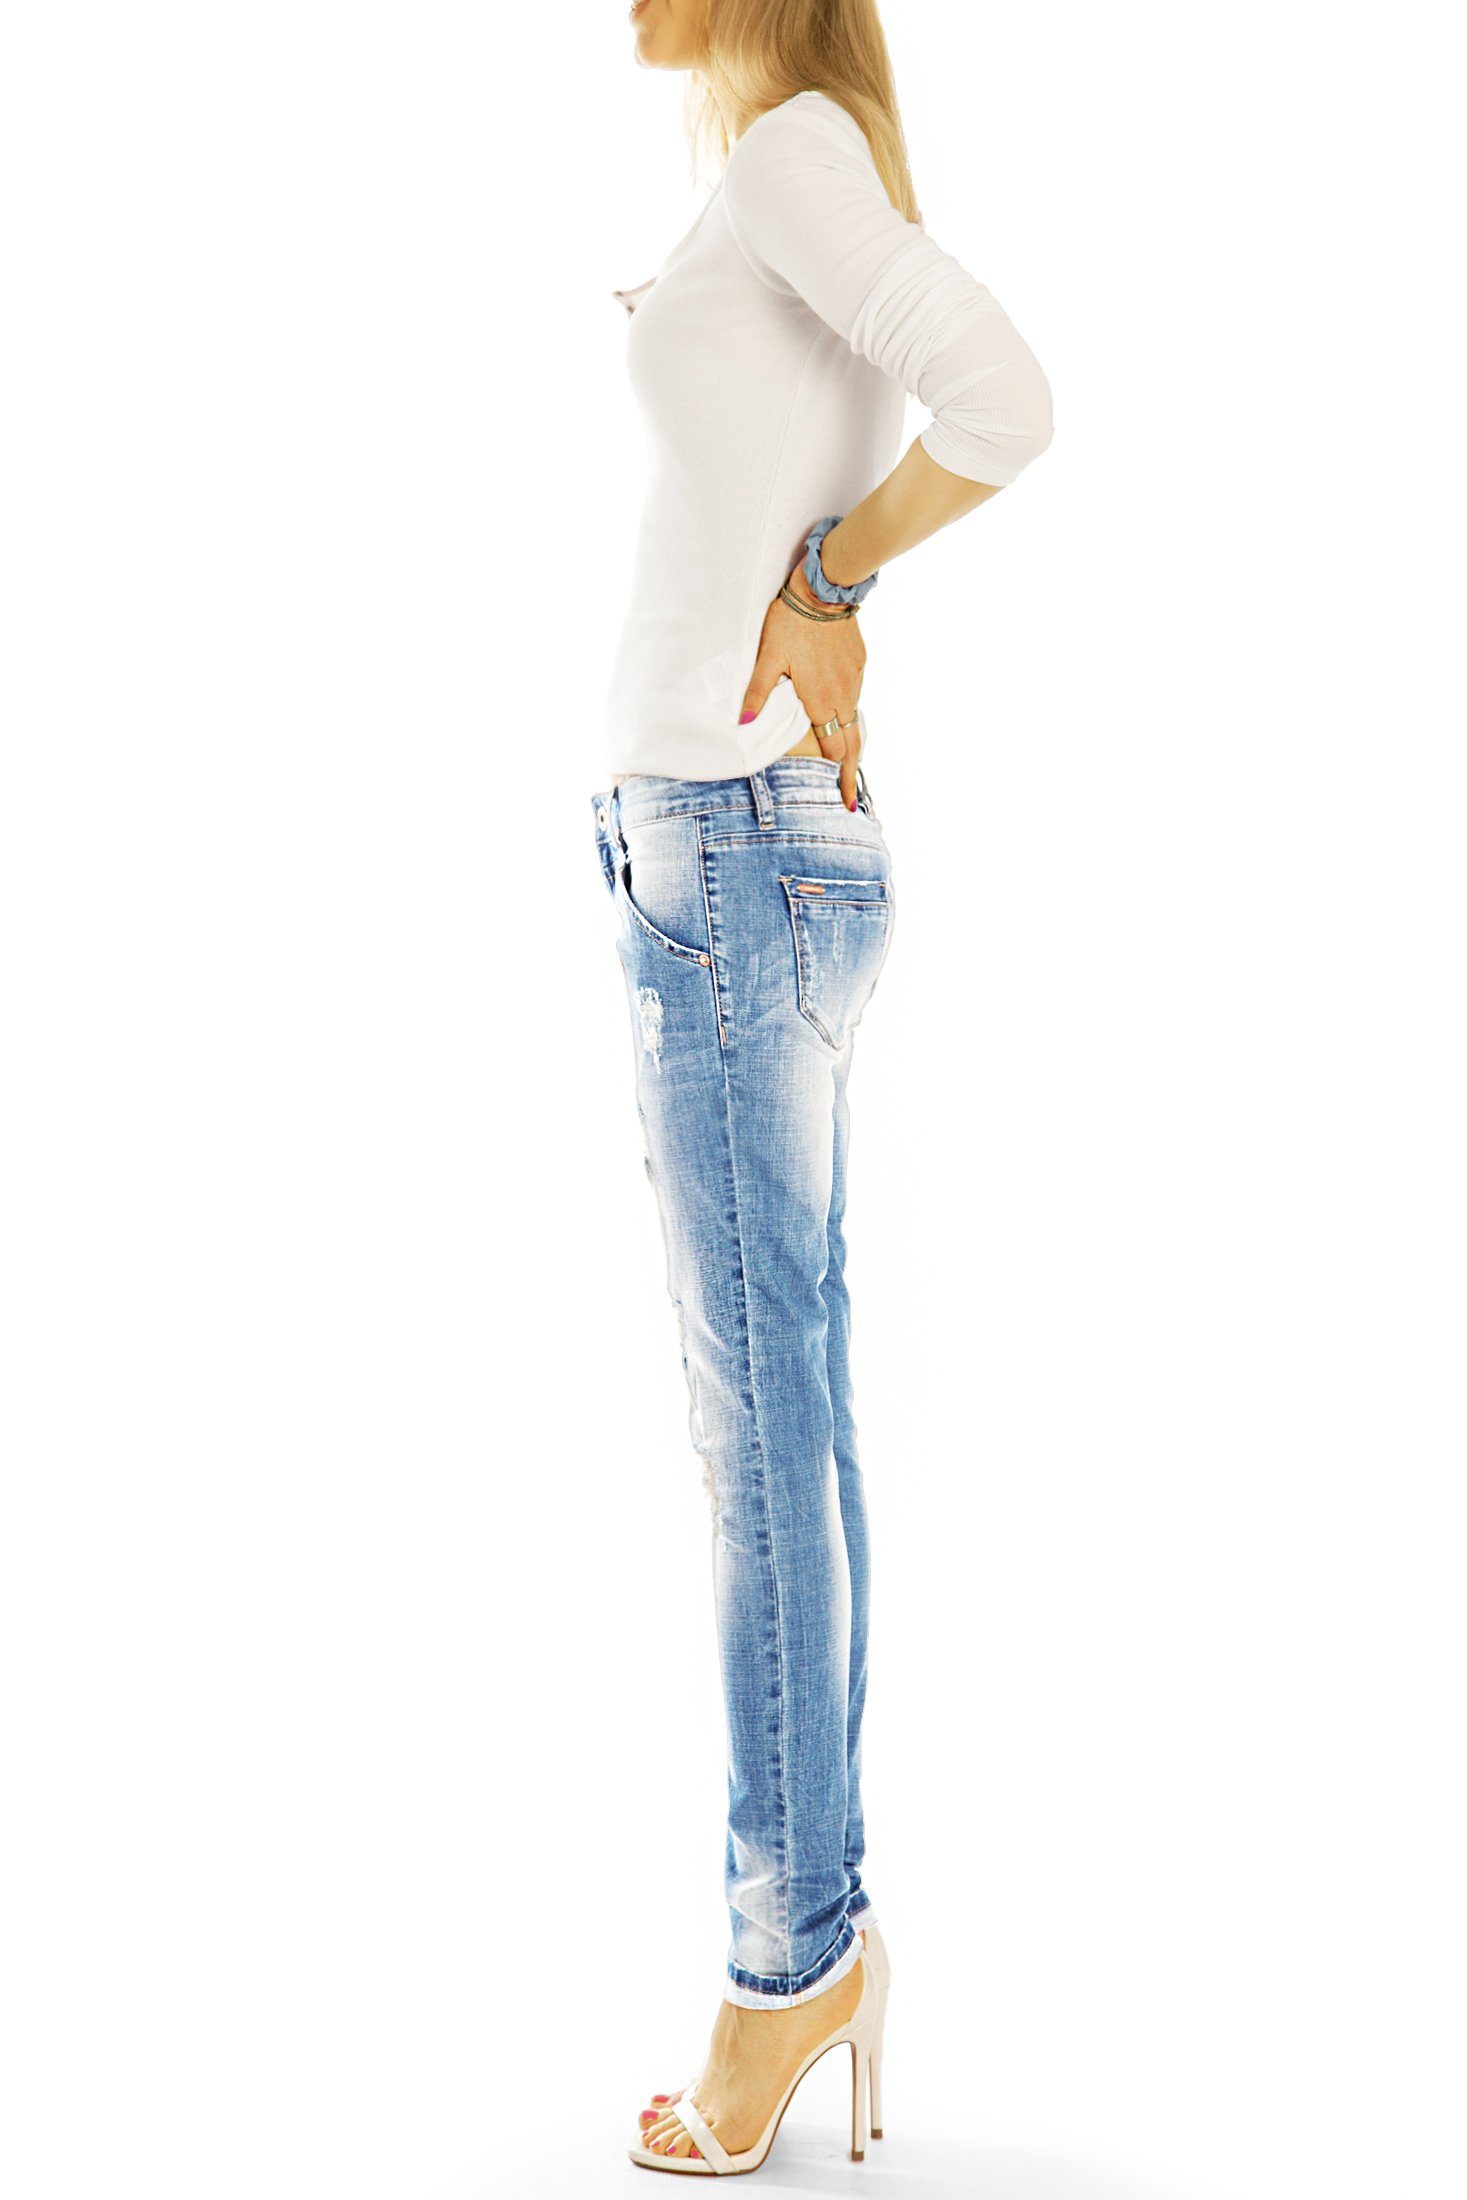 mit styled waist Destroyed-Jeans Röhrenjeans Hüftjeans Jeans- j14k-4 Vintage - 5-Pocket-Style Hosen Stretch-Anteil, be Slimfit Damen zerissene low Skinny